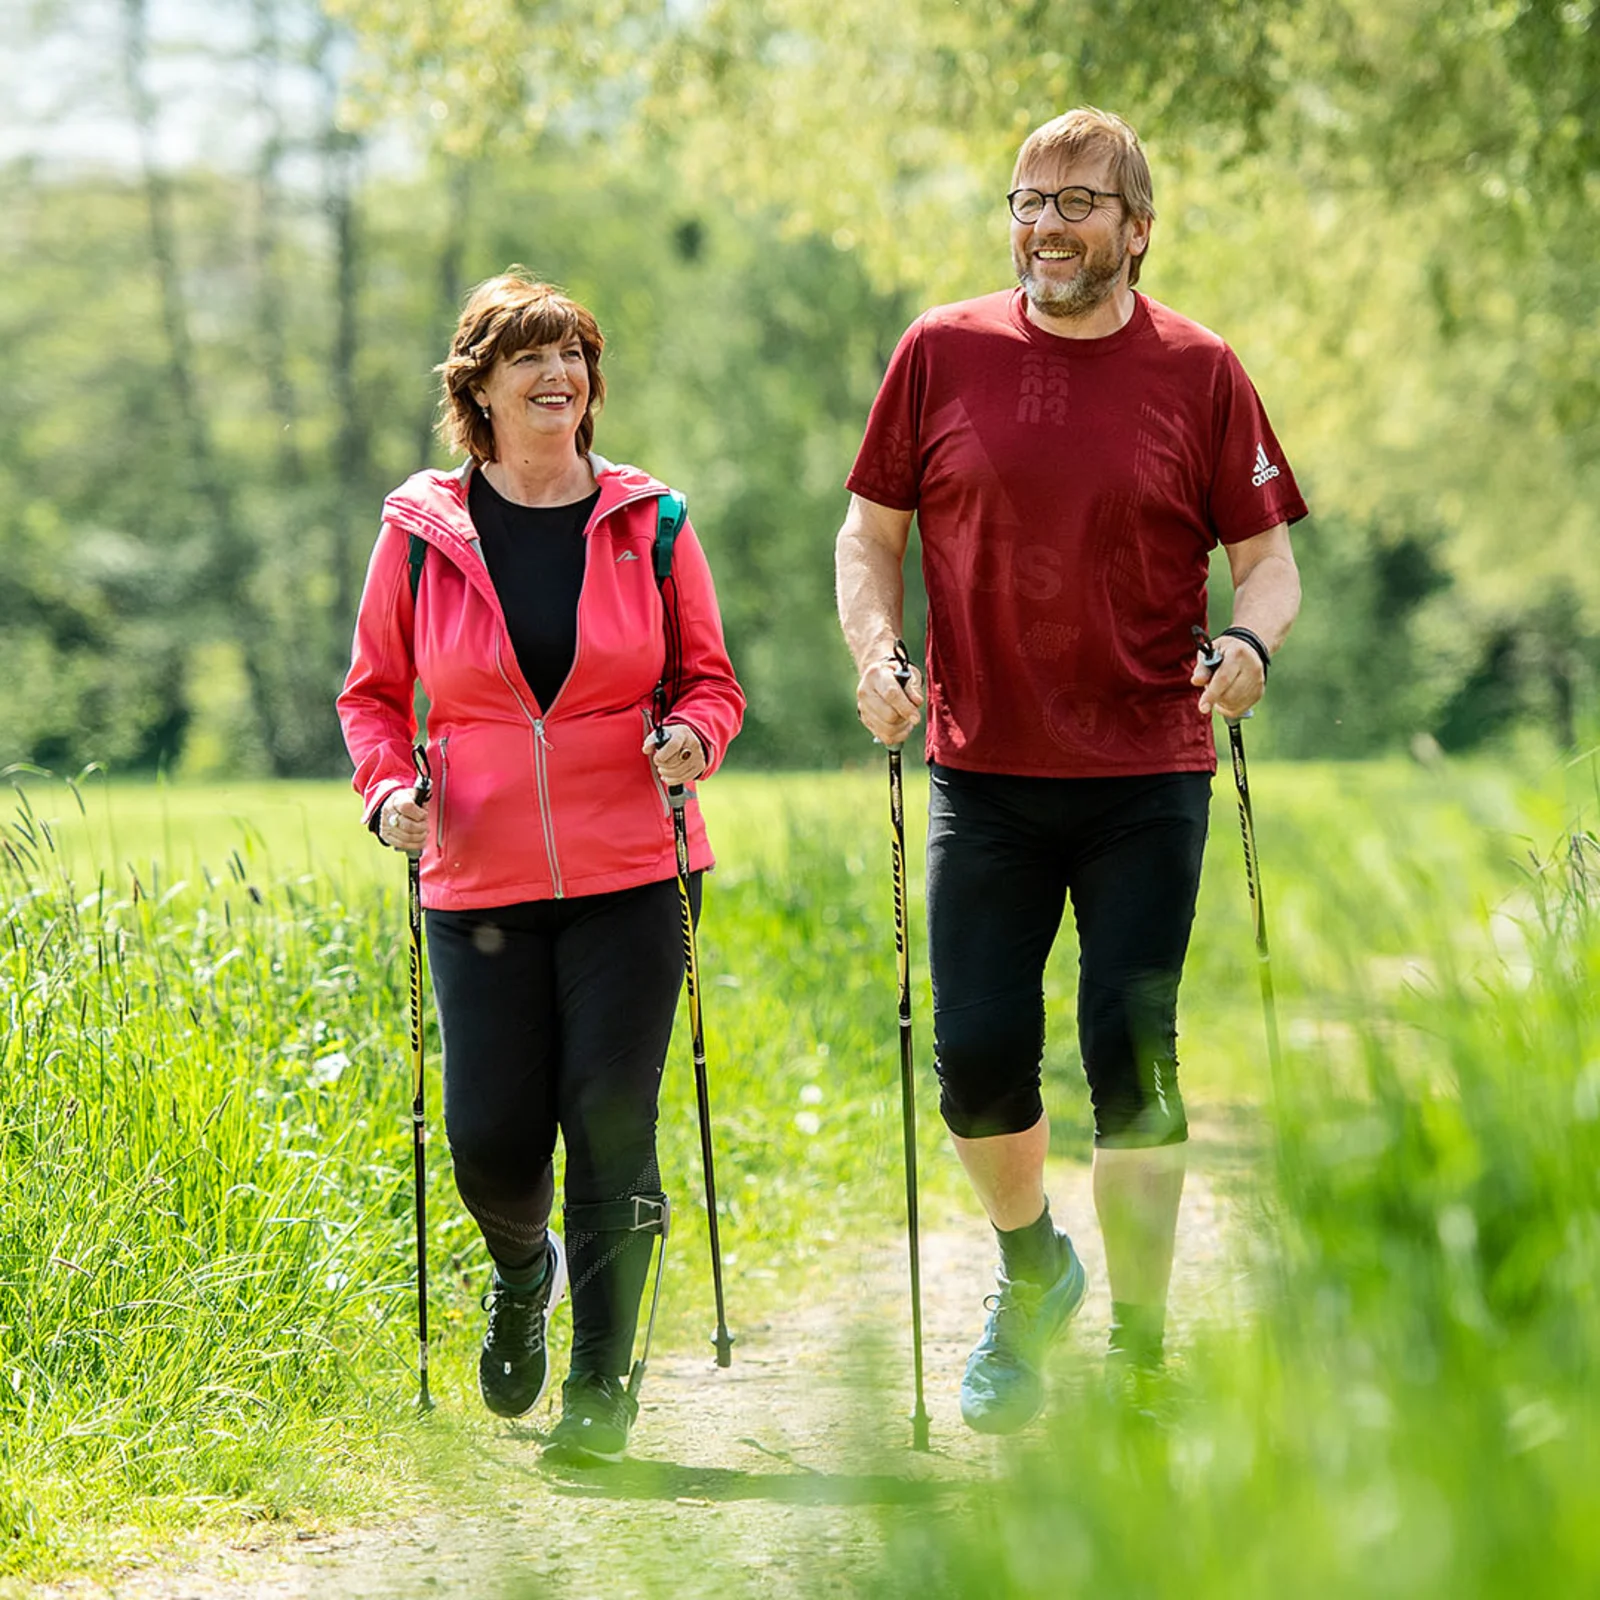 Führt ein aktives Leben trotz Kniearthrose: Silvia mit der Agilium Freestep 3.0